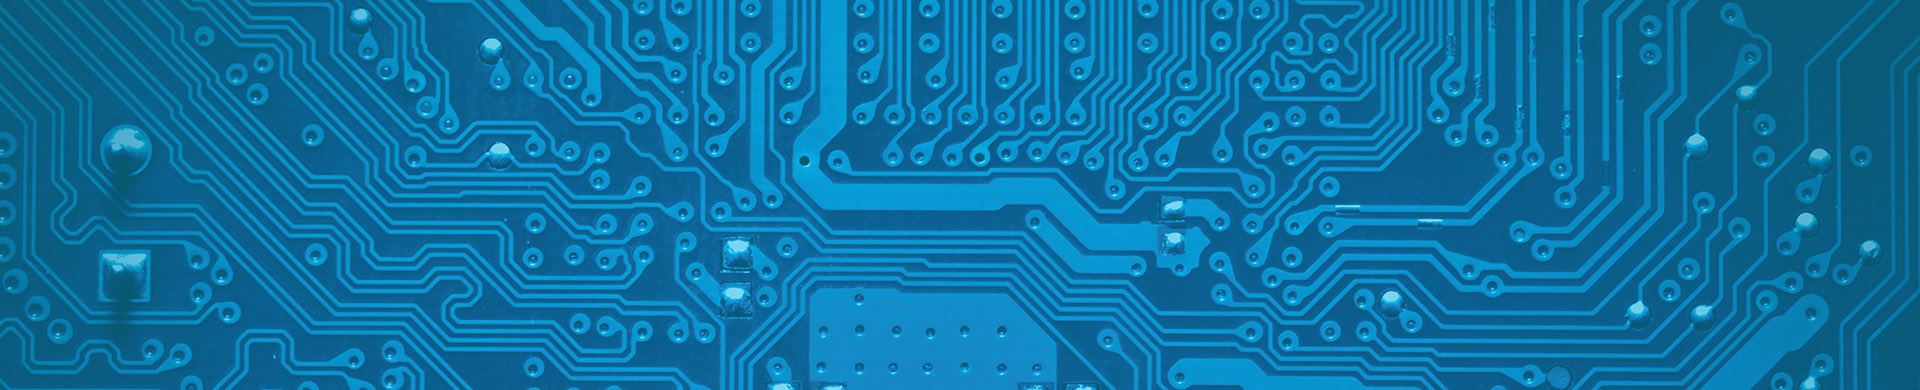 Decorative image of a circuitboard